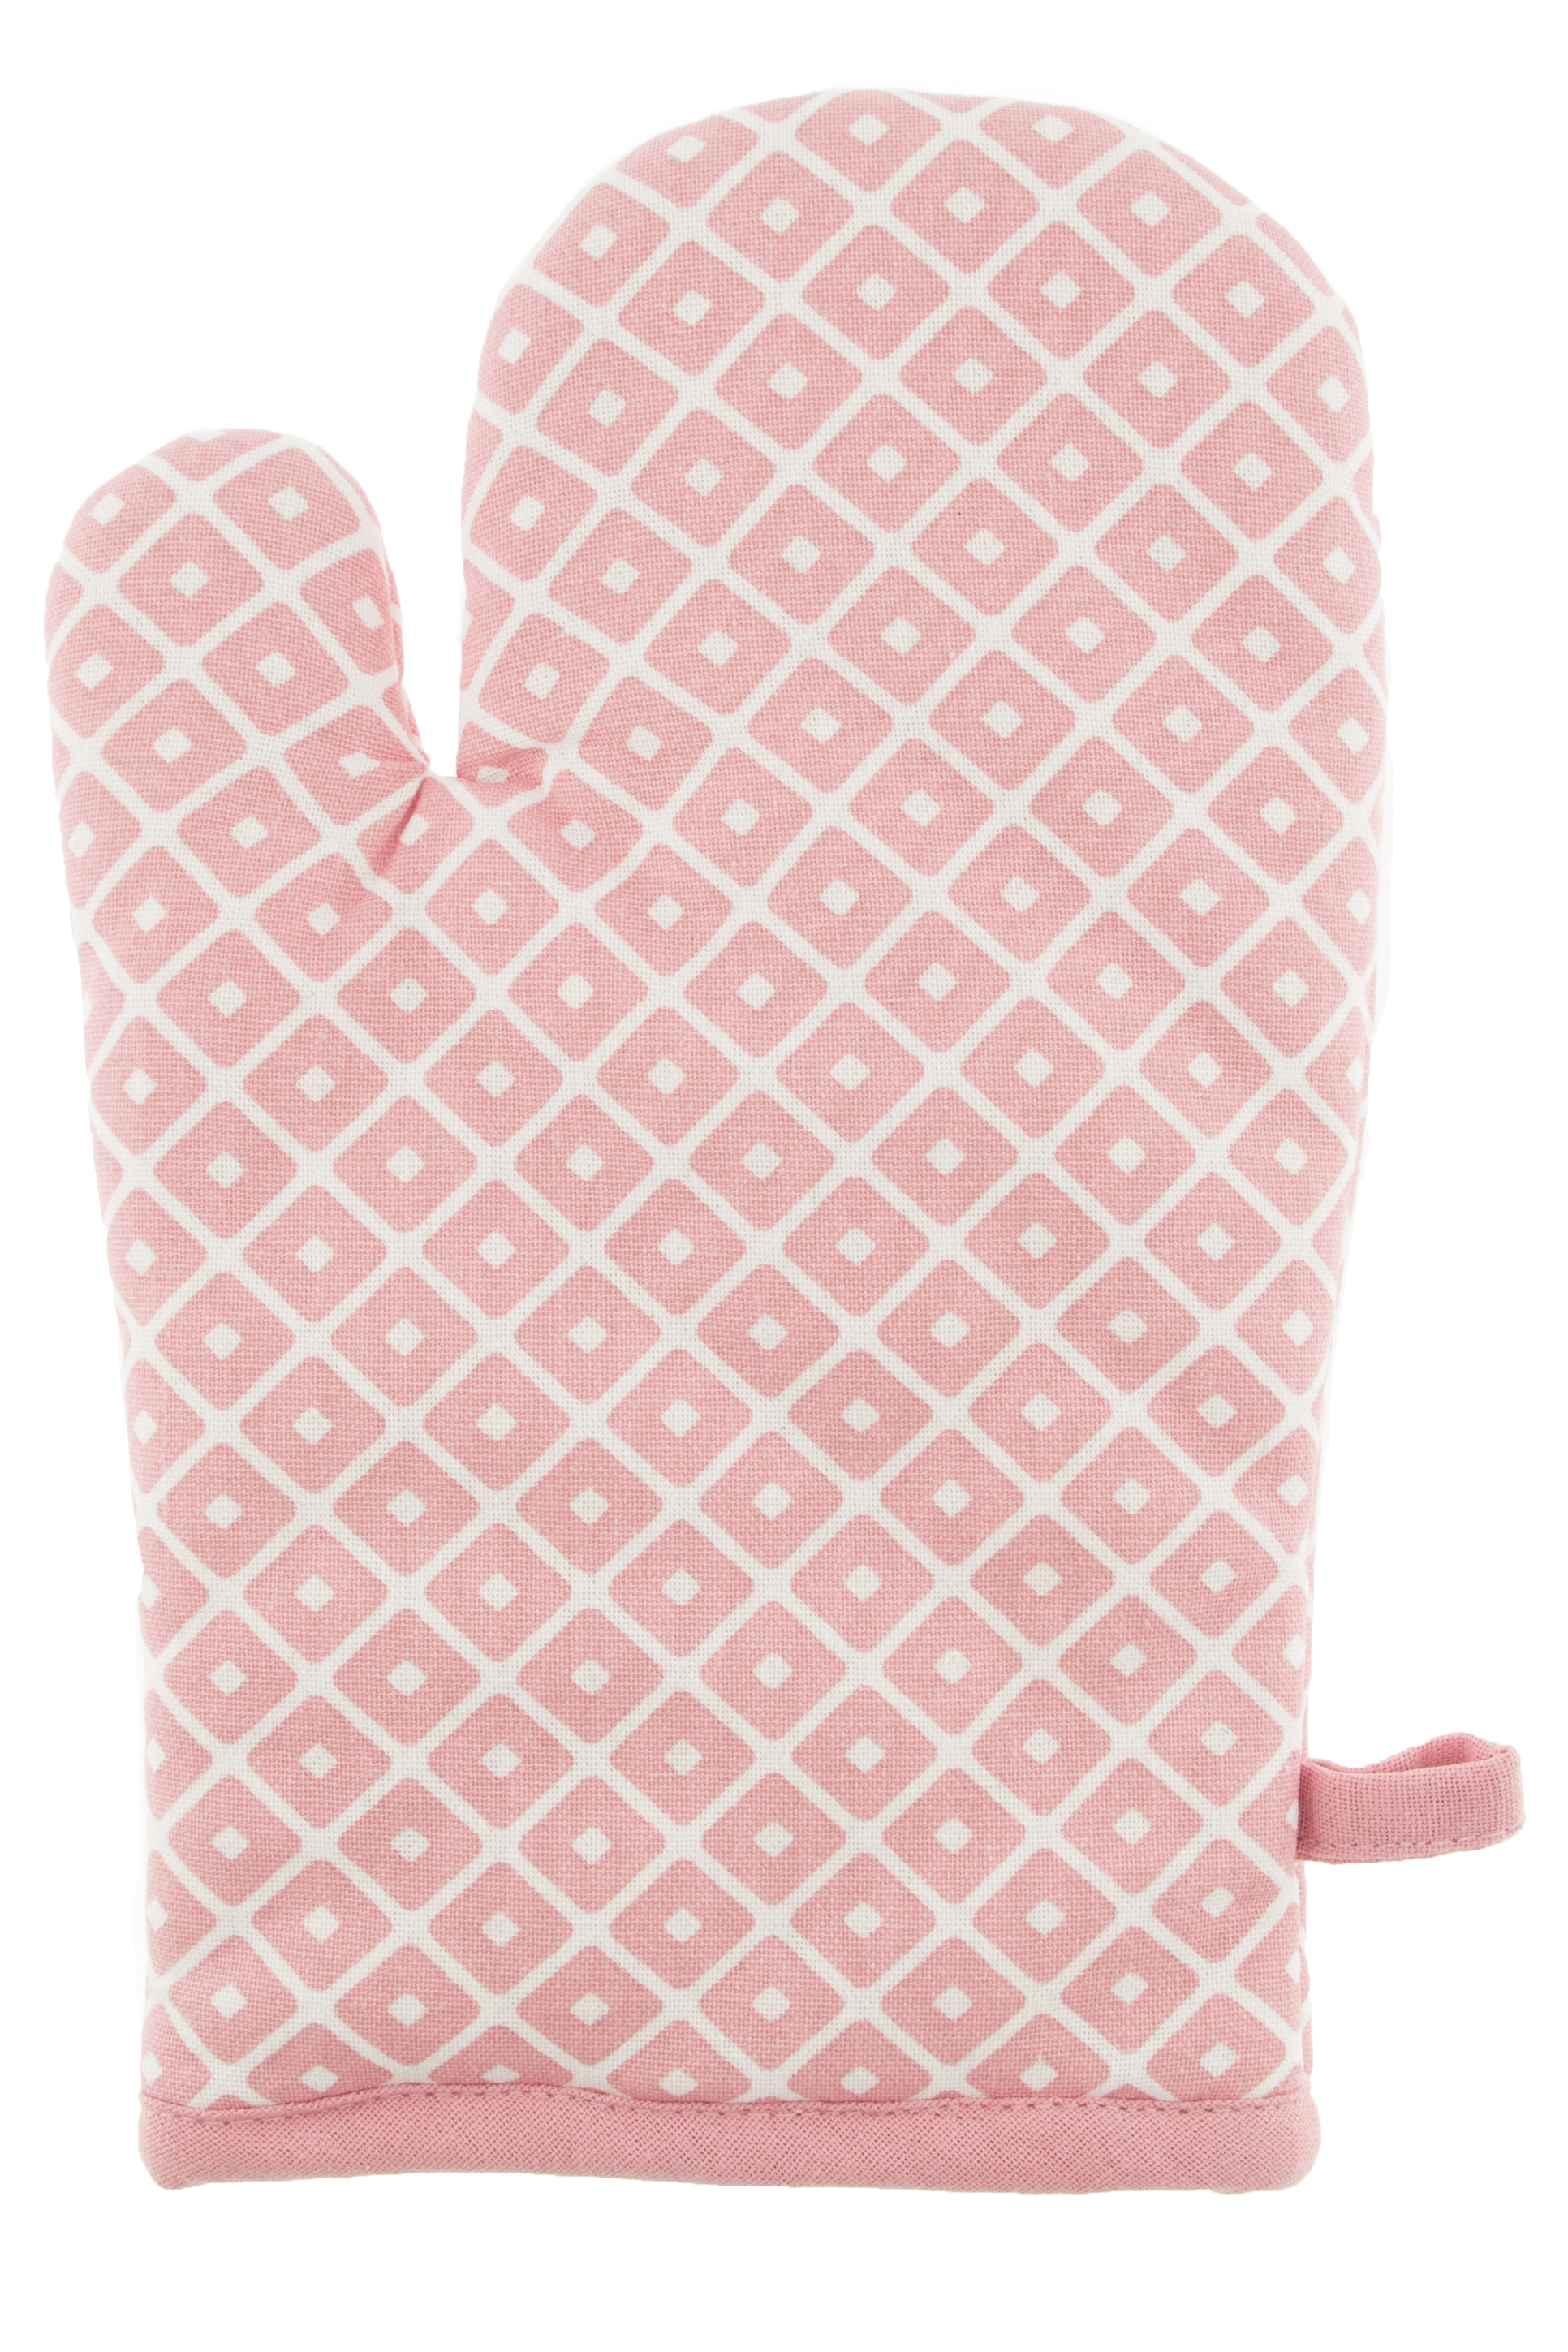 Glove geo dot 18x28, J-hook, soft pink